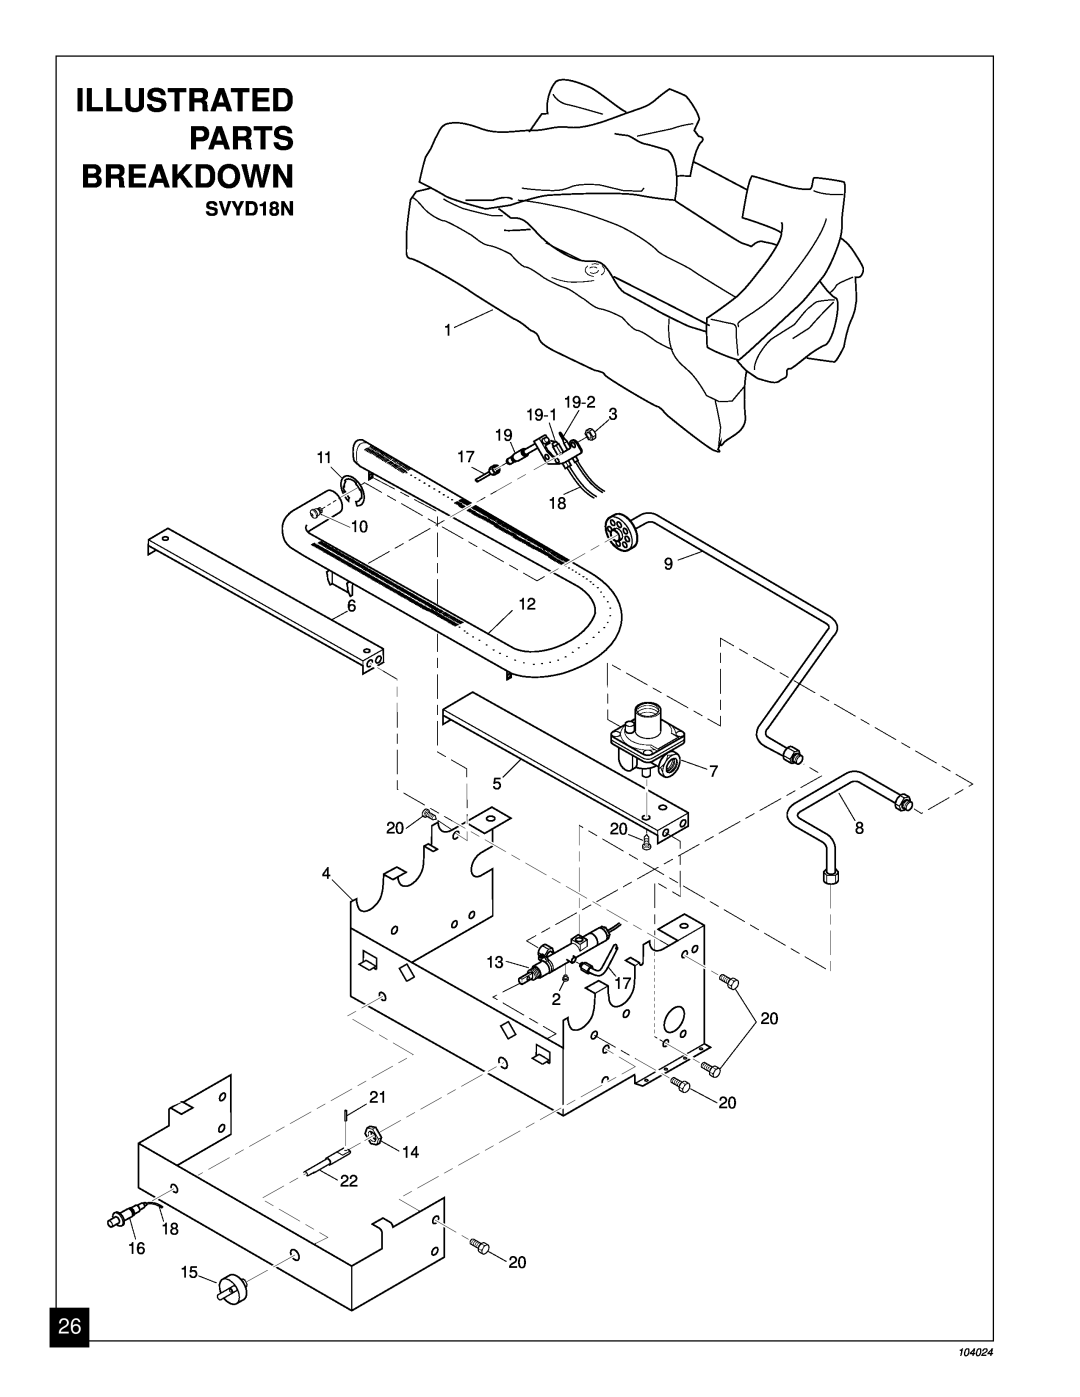 Desa SVYD18N installation manual Illustrated, Breakdown, Parts, 104024 